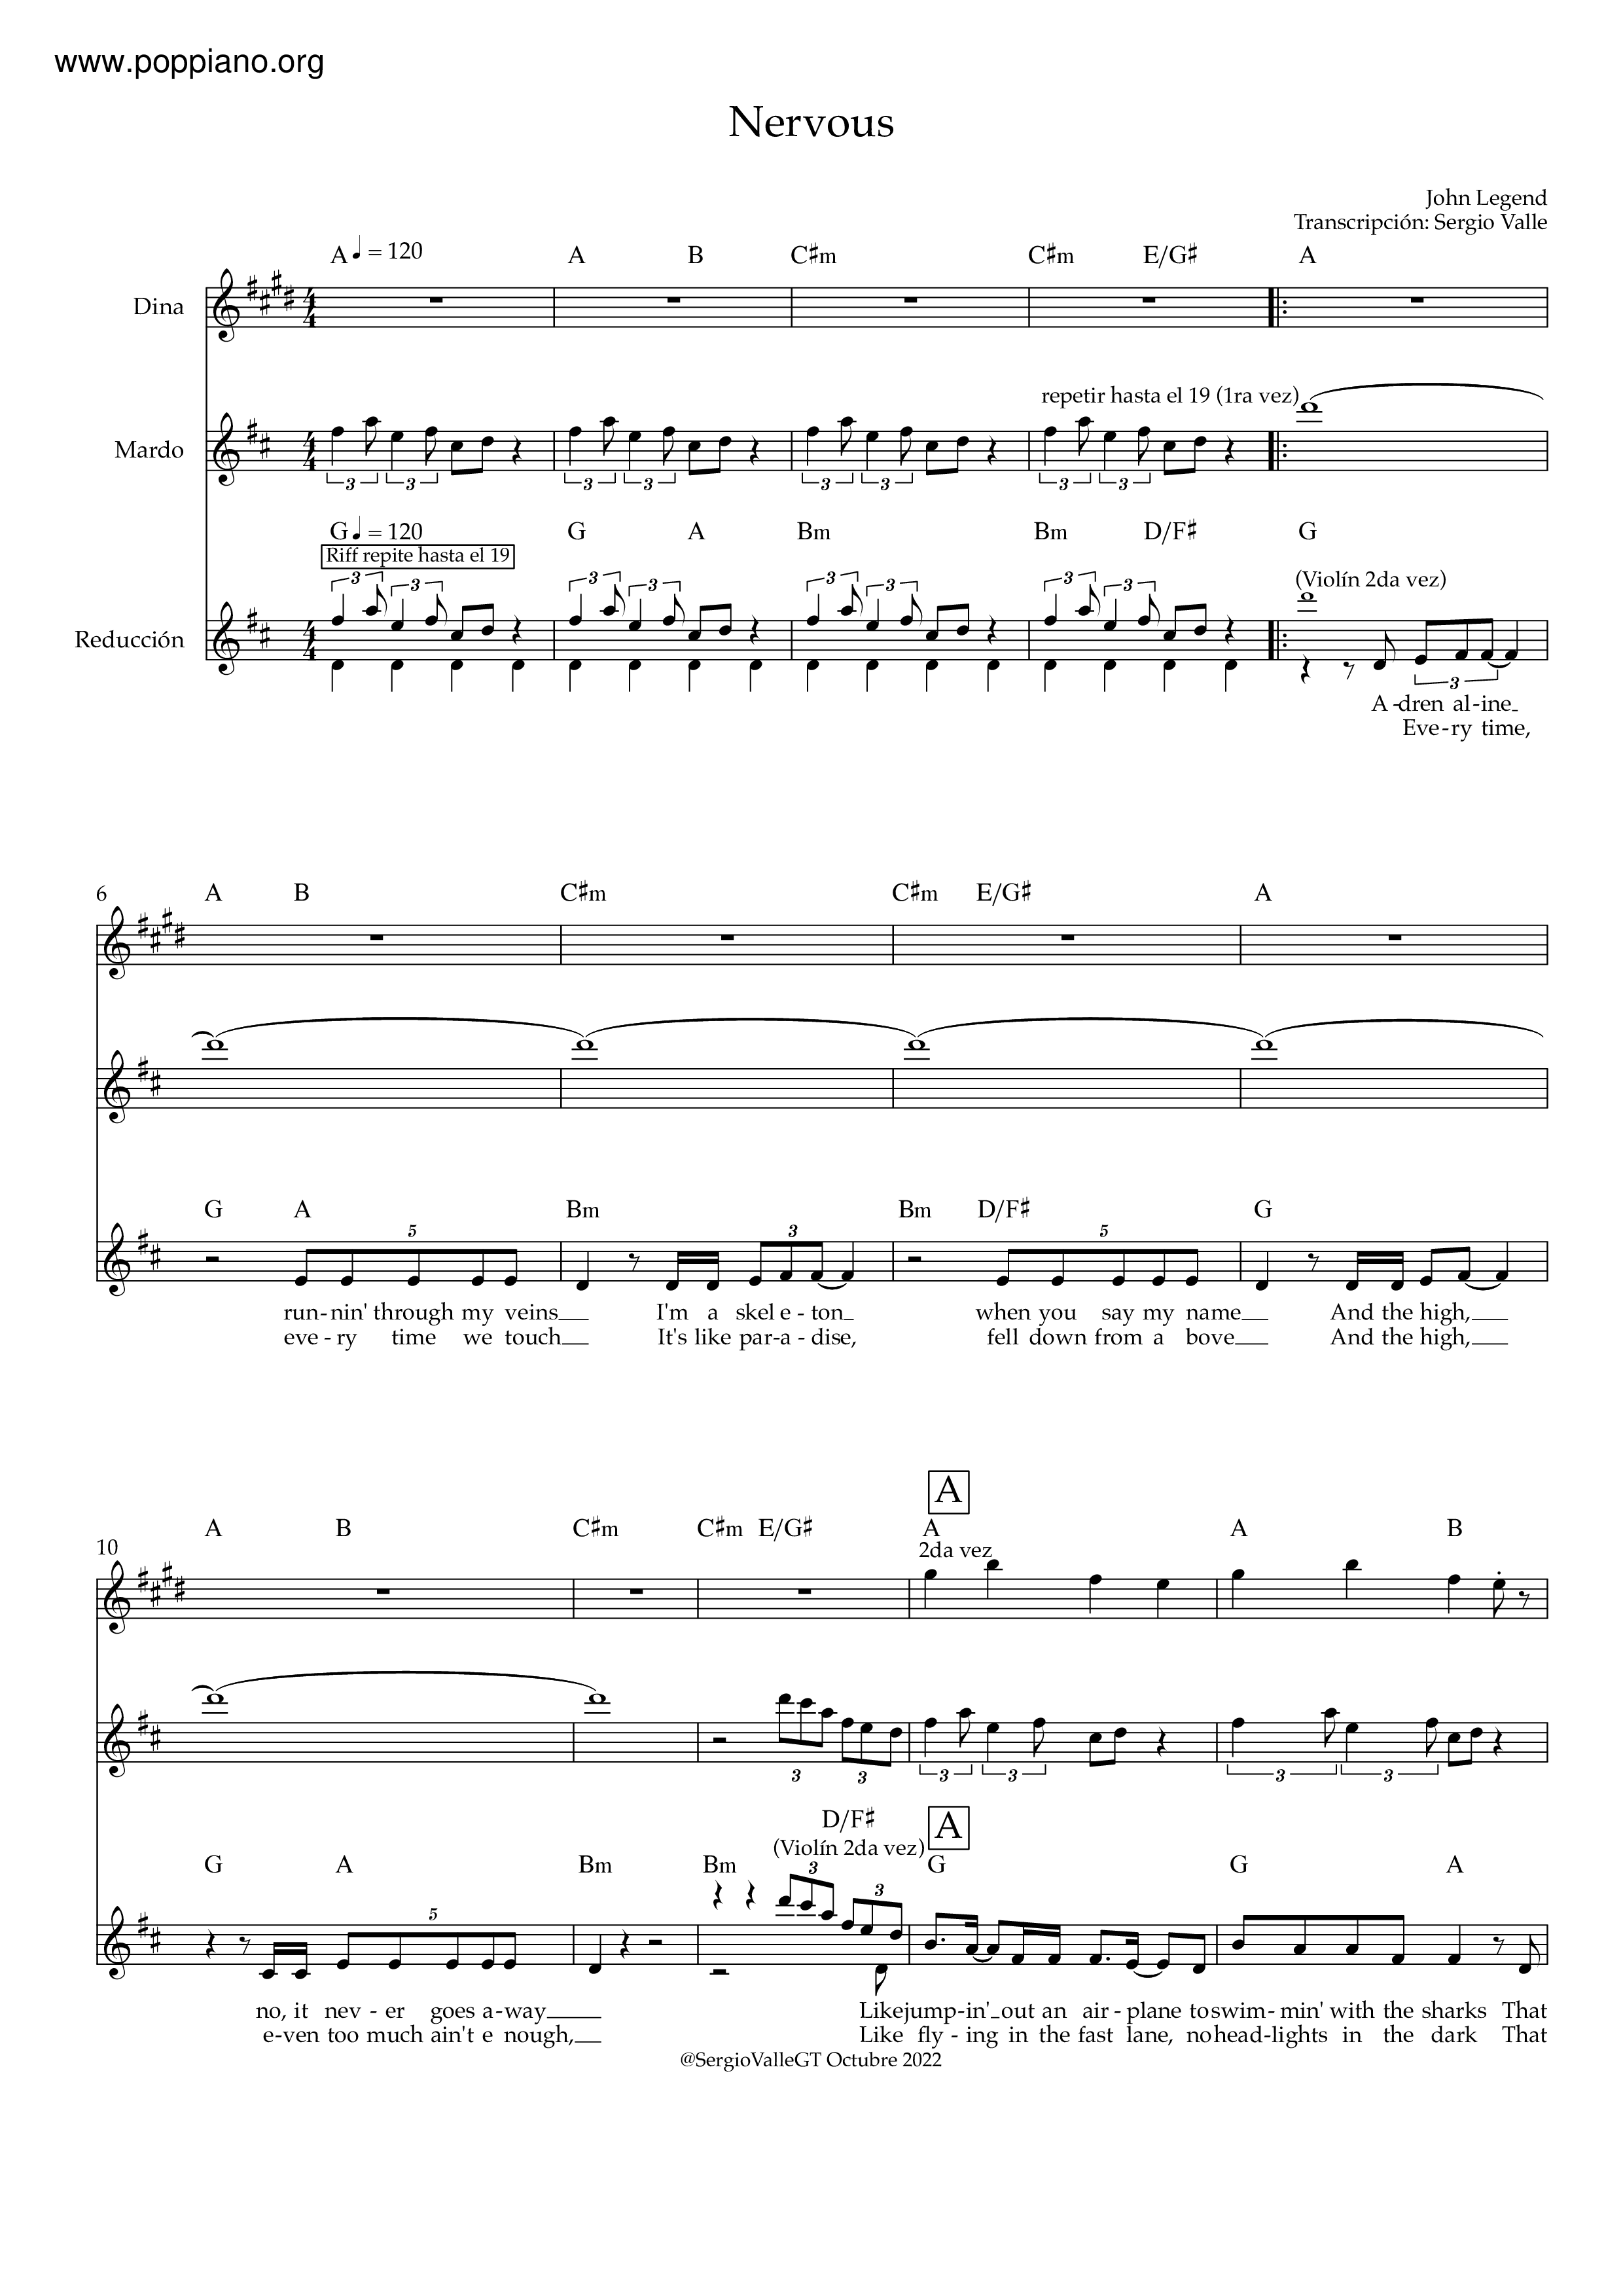 John Legend-Nervous Sheet Music pdf, - Free Score Download ★